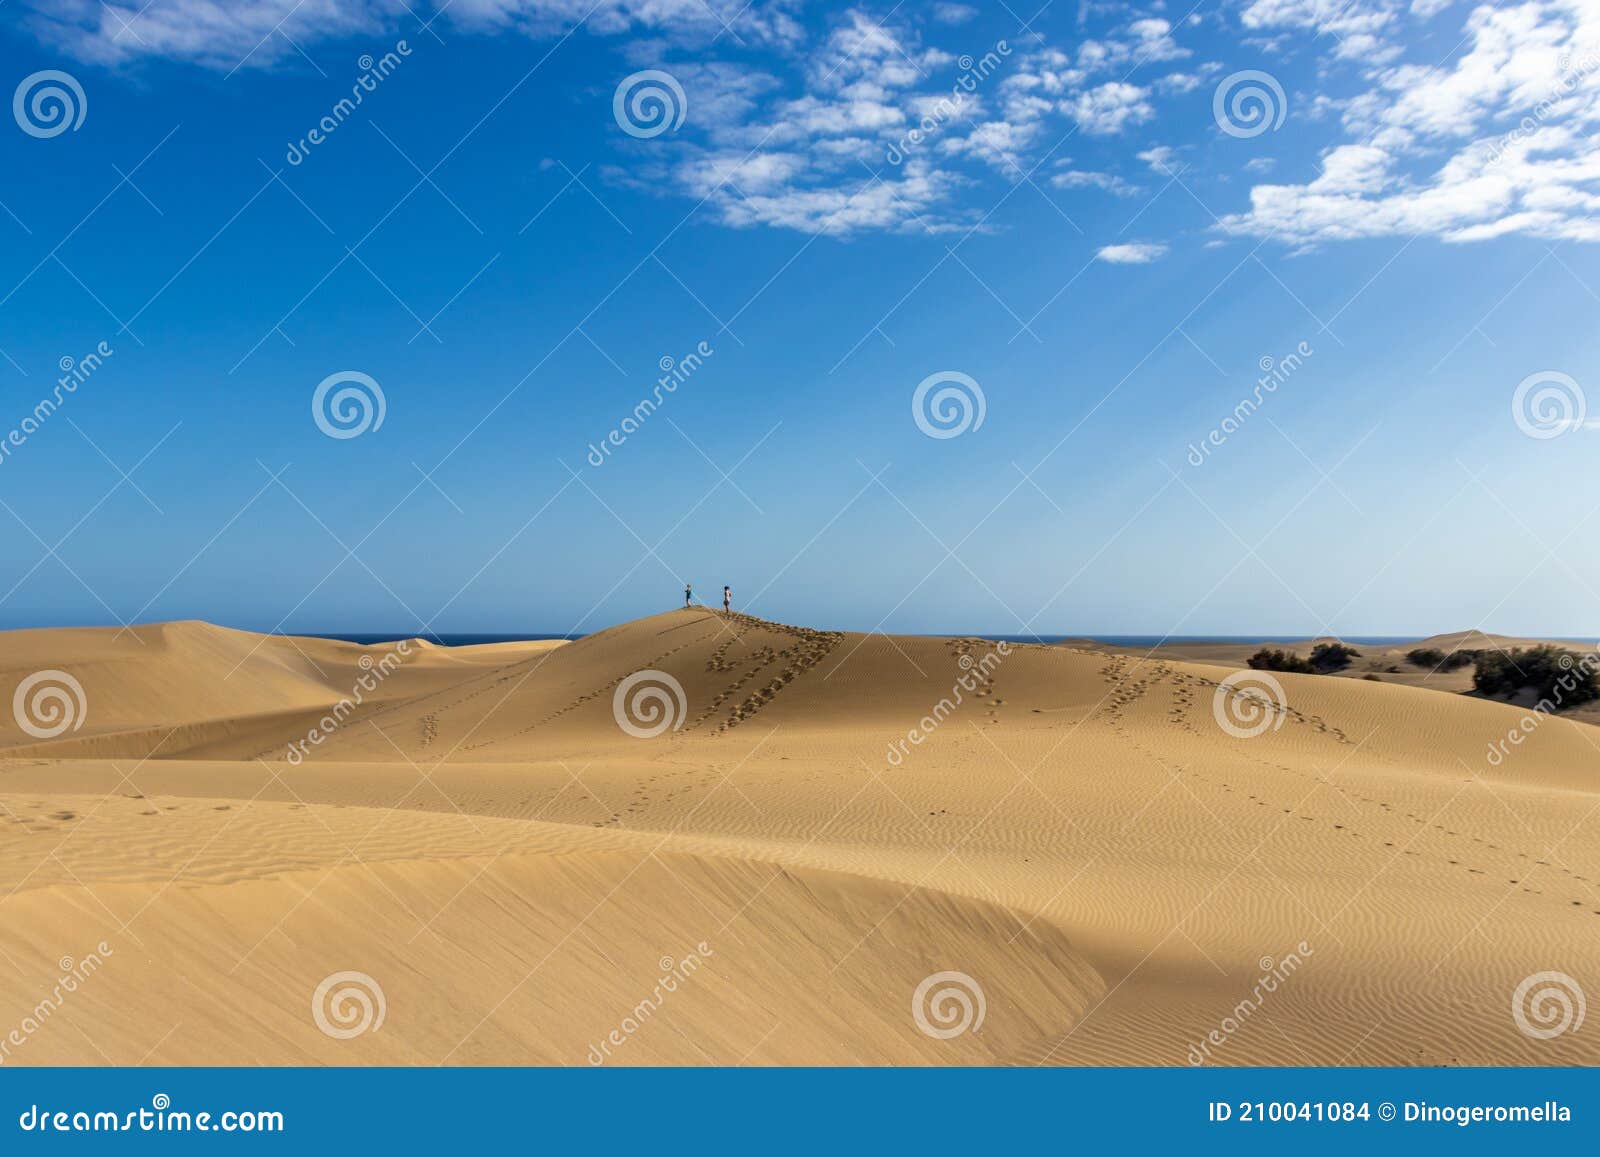 Couple on Maspalomas Dunes Sahara Sand Stock Photo - Image of dubai ...